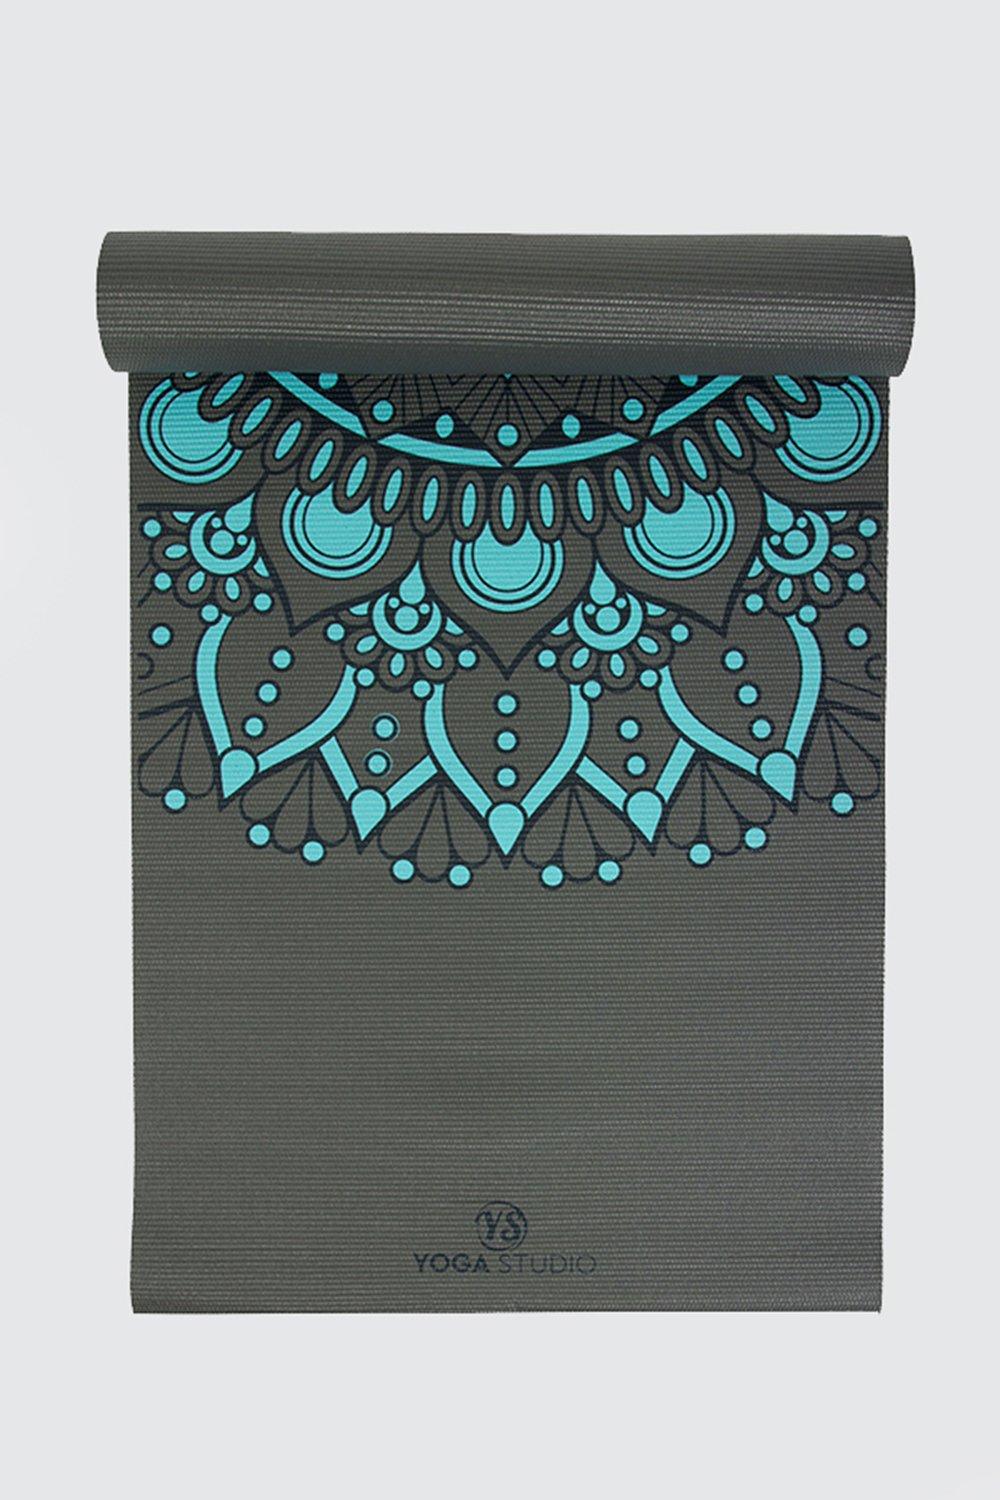 Yoga Studio Grey Mandala Designed Yoga Mat 6mm